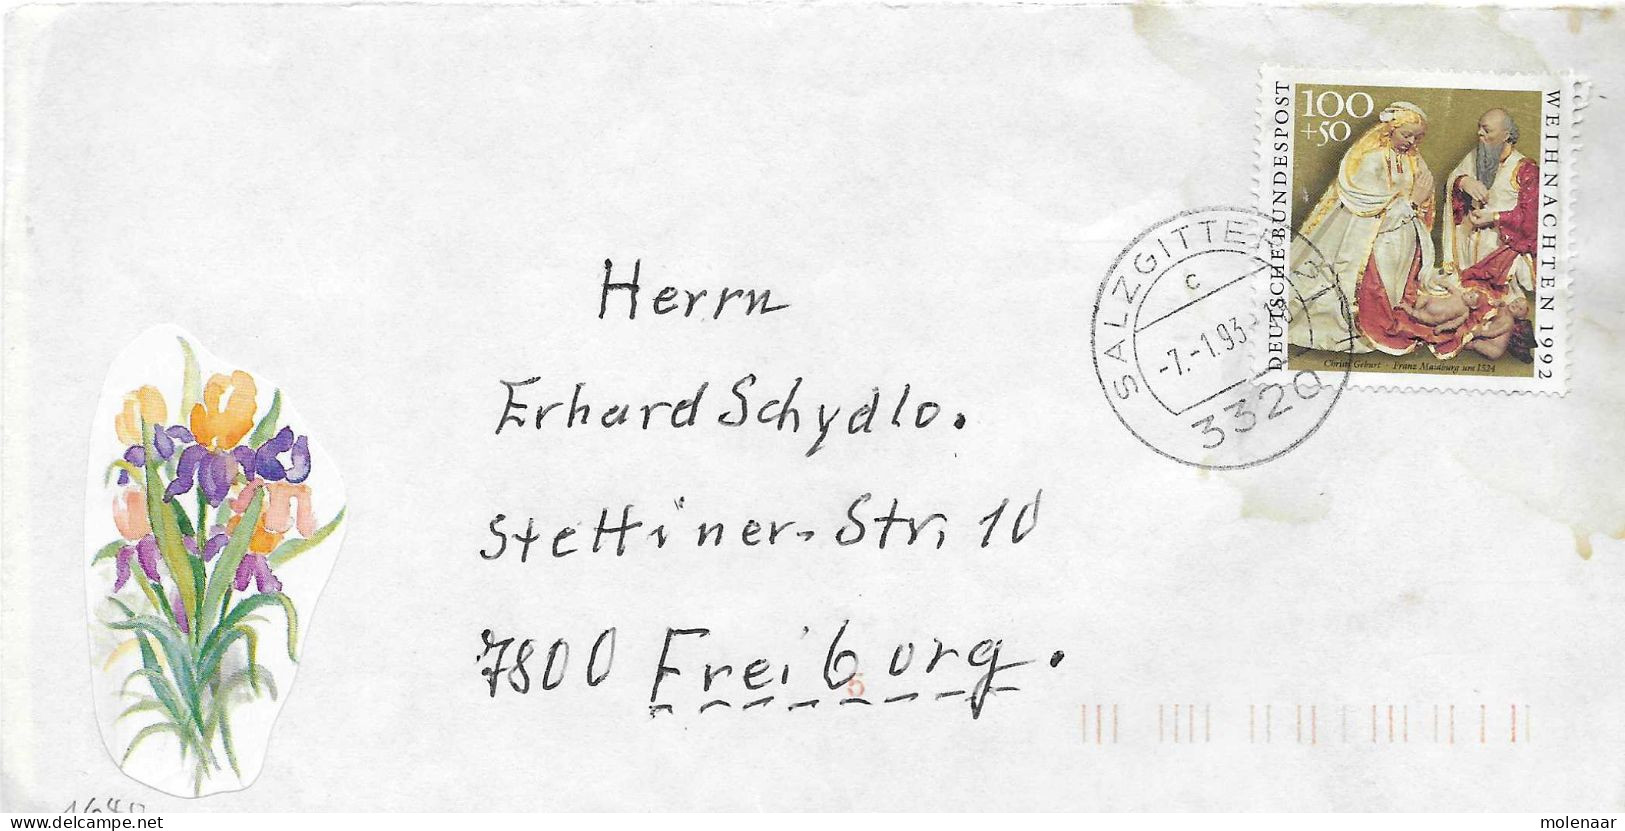 Postzegels > Europa > Duitsland > West-Duitsland > 1990-1999 > Brief Met No. 1640 (17292) - Covers & Documents